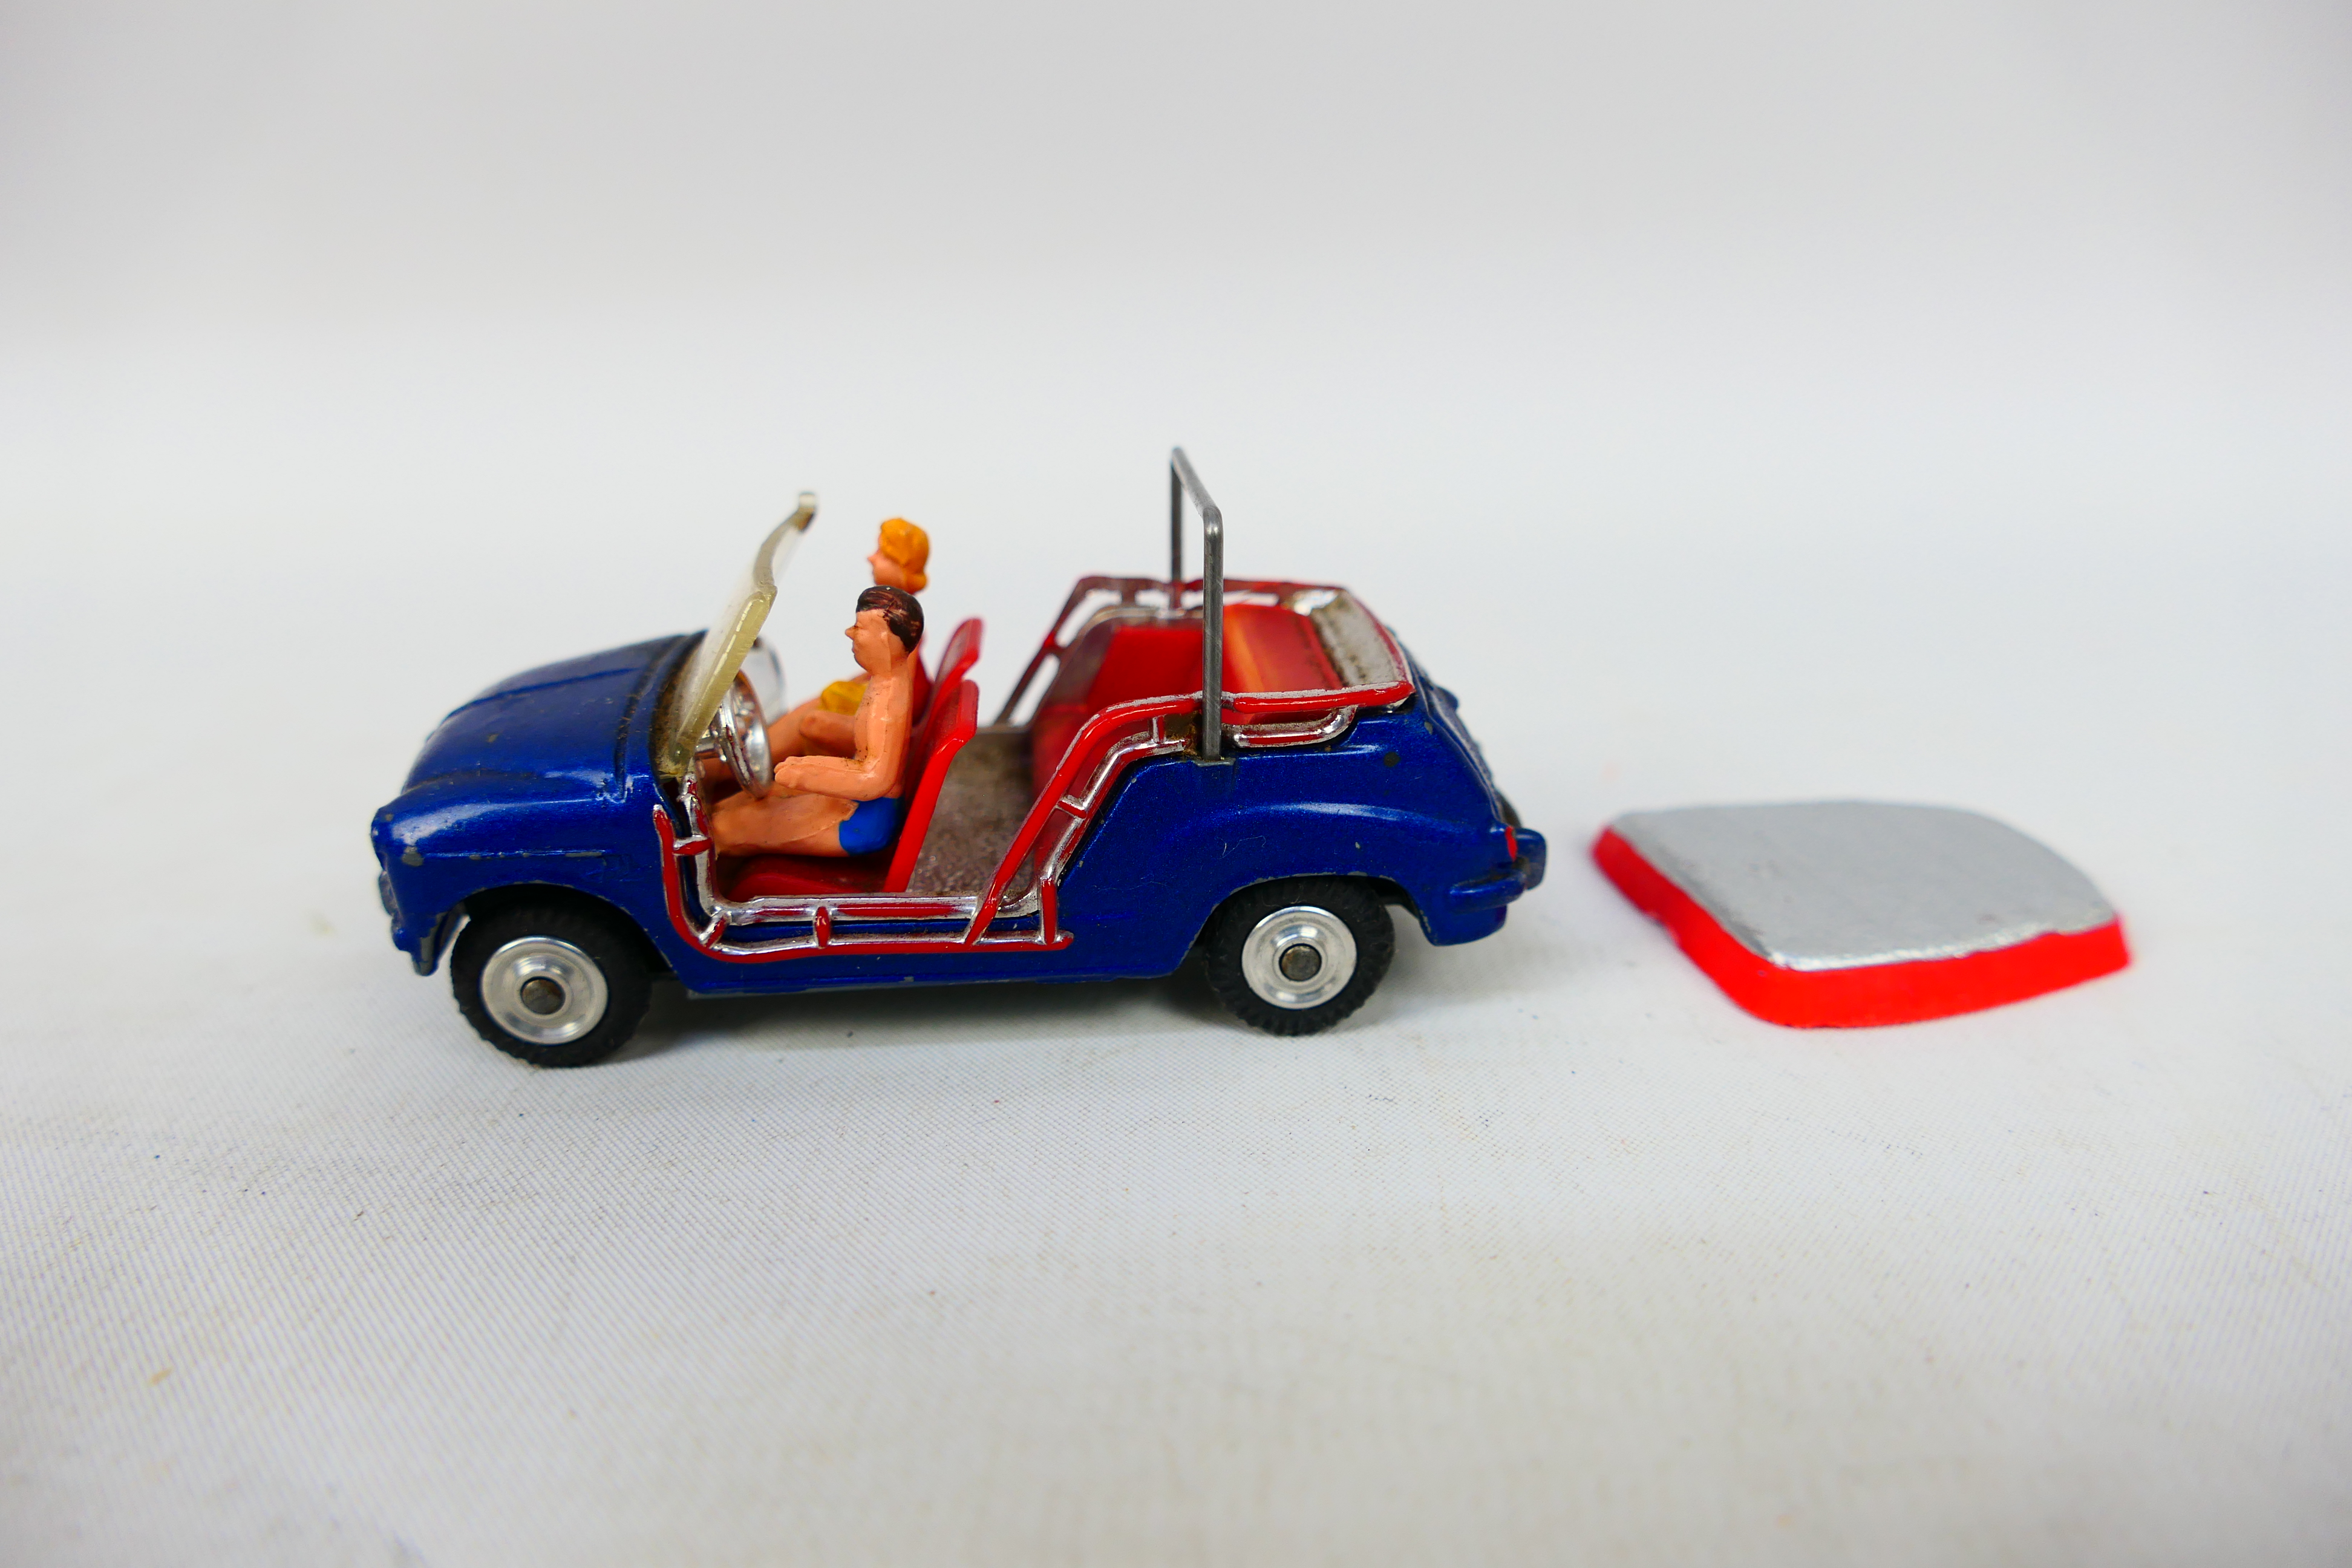 Corgi Toys - Four unboxed diecast model cars from Corgi Toys. - Image 5 of 6